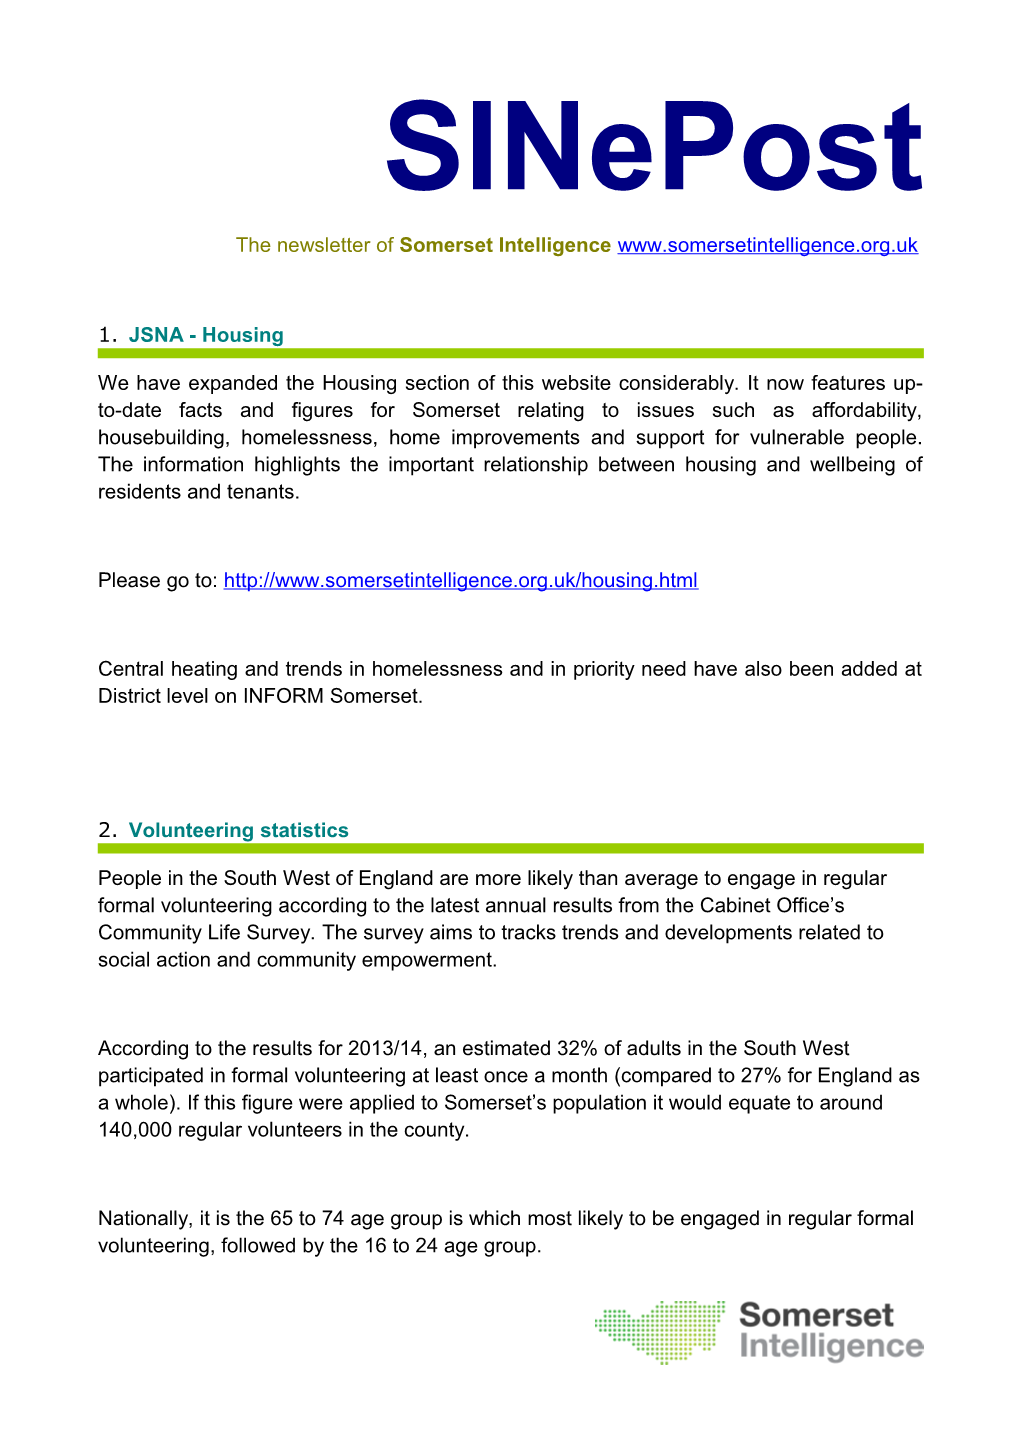 The Newsletter of Somerset Intelligence